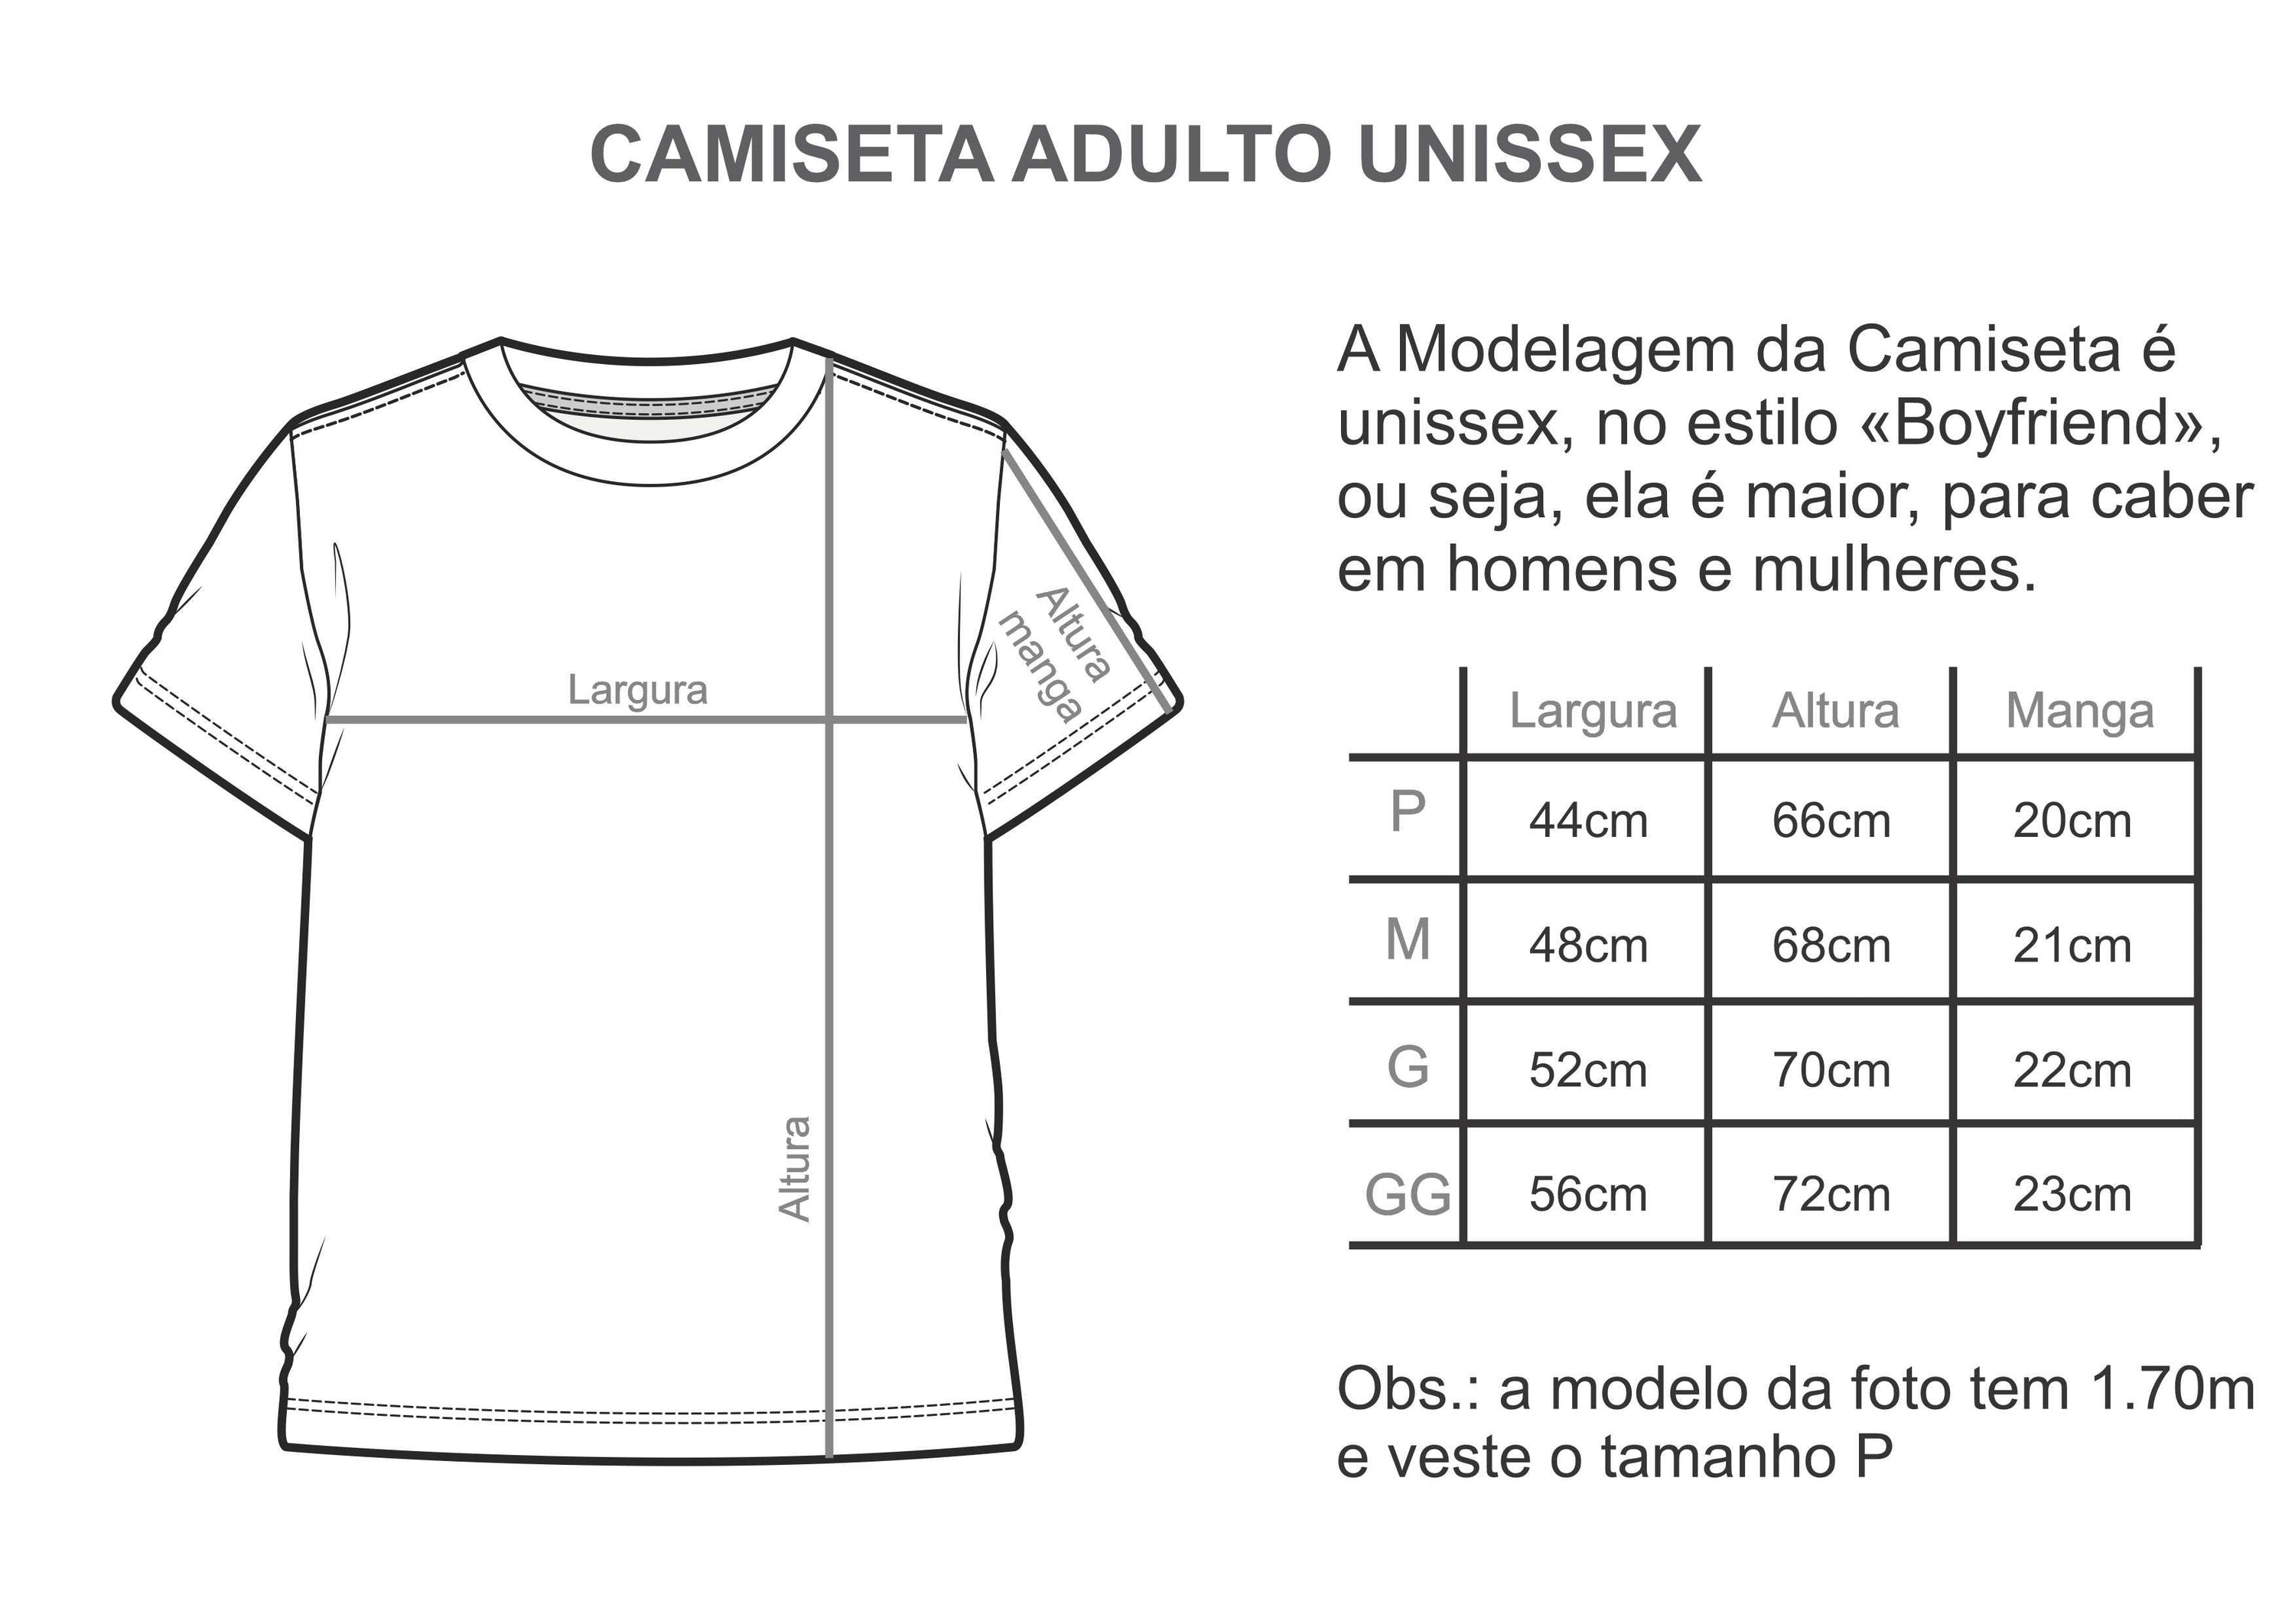 Camiseta Adulto Love You More - MiniMalista Baby - b2b, Meia Estação, Menino, Neutro, outlet, Unissex -bebê-minimalista-estiloso